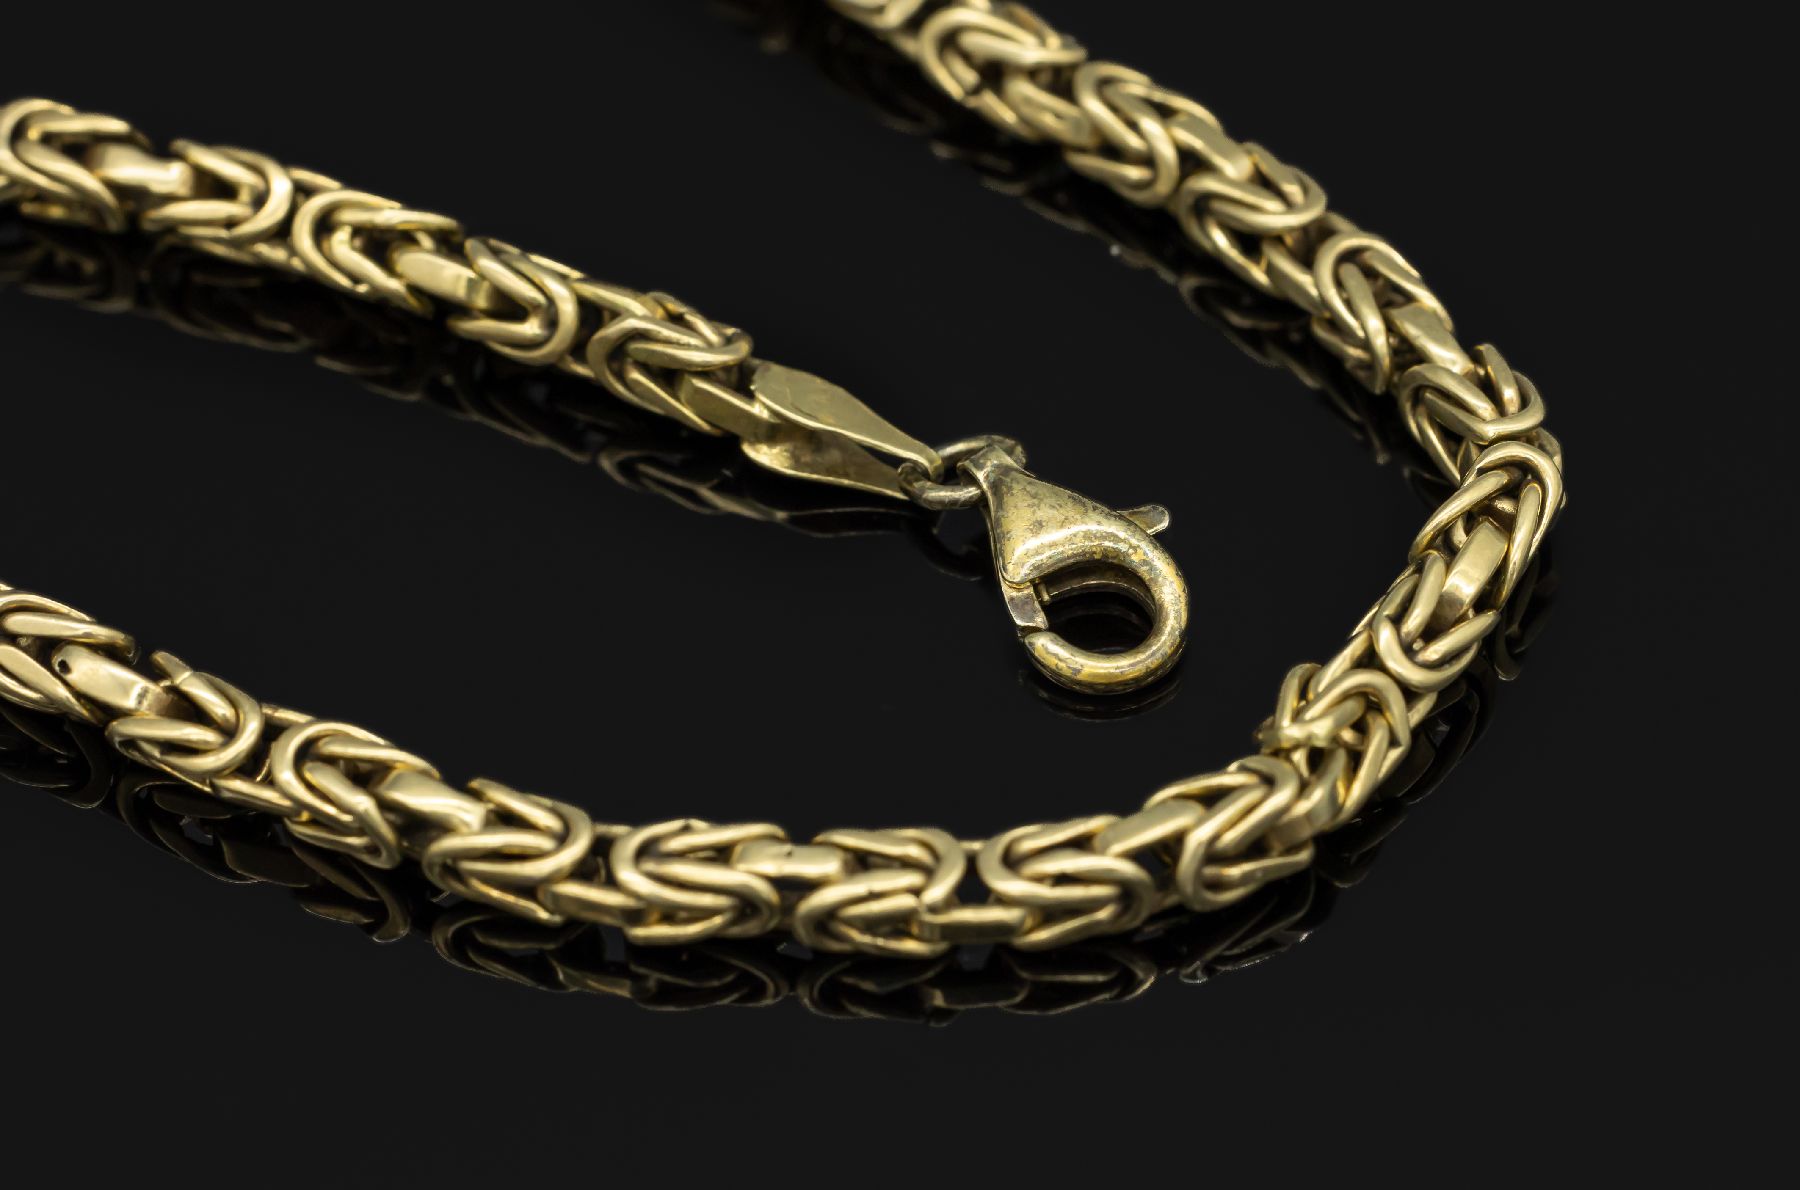 14 kt Gold Armband im Königskettendesign, GG 585/000, 1